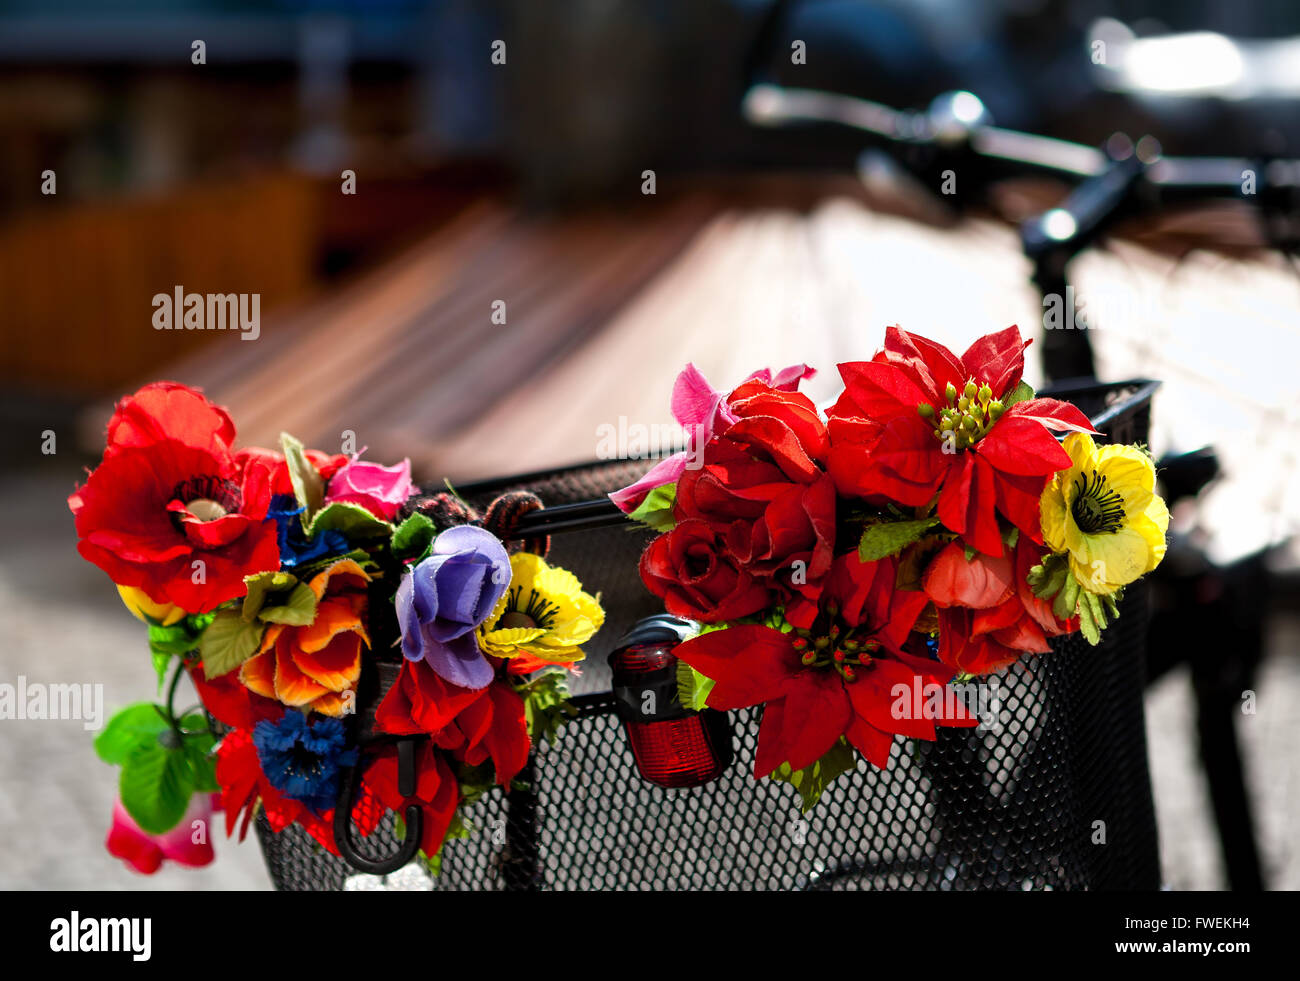 Artificial flowers on a metal bike basket Stock Photo